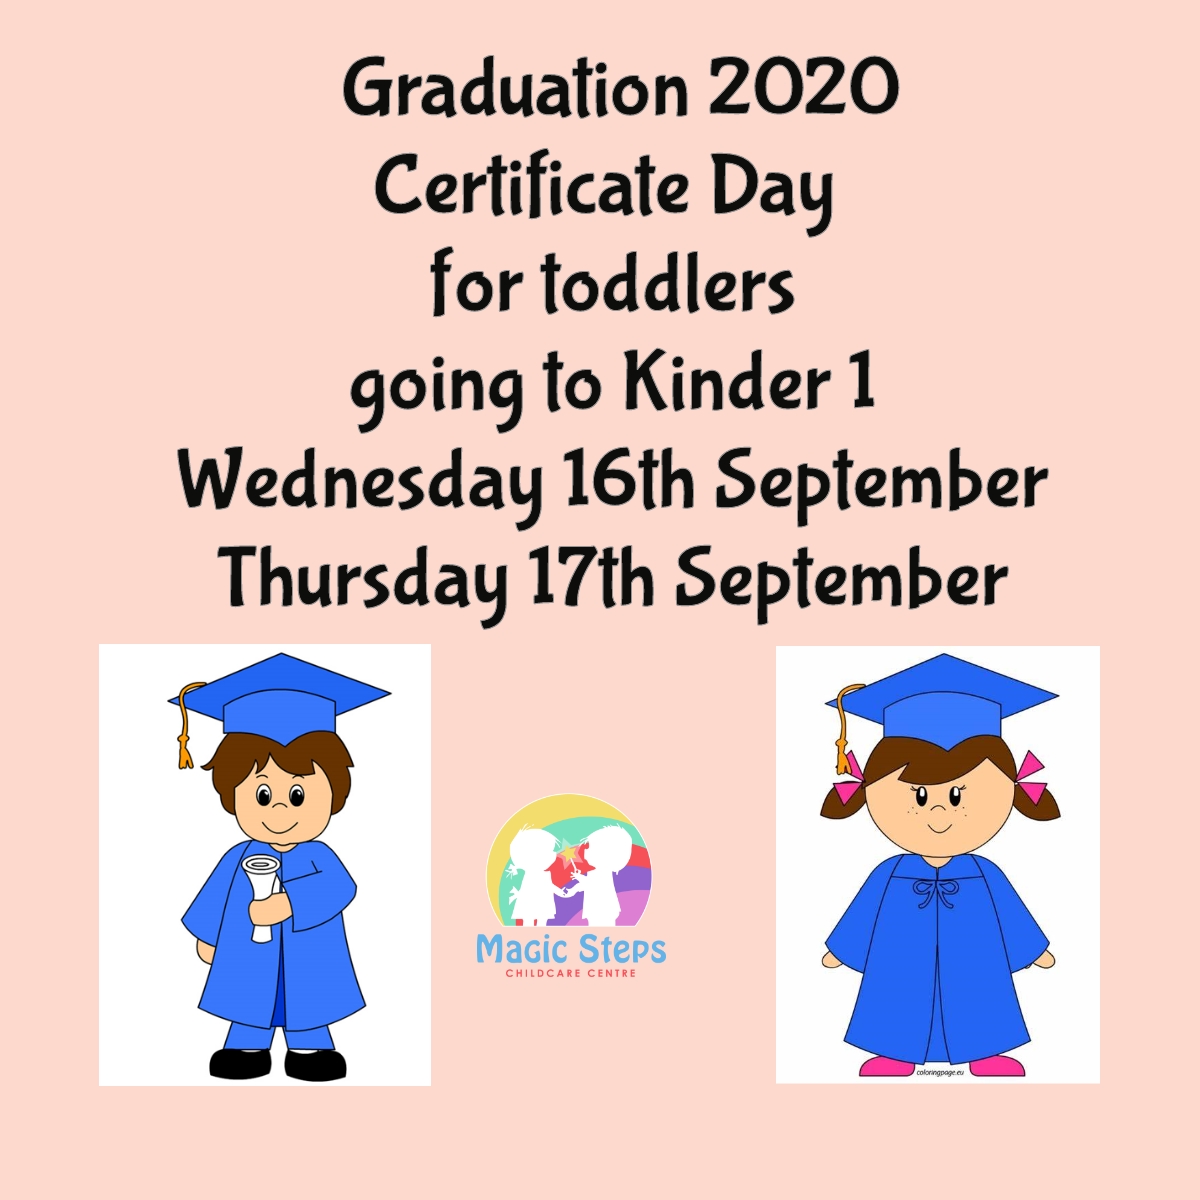 Graduation 2020 Certificate Day